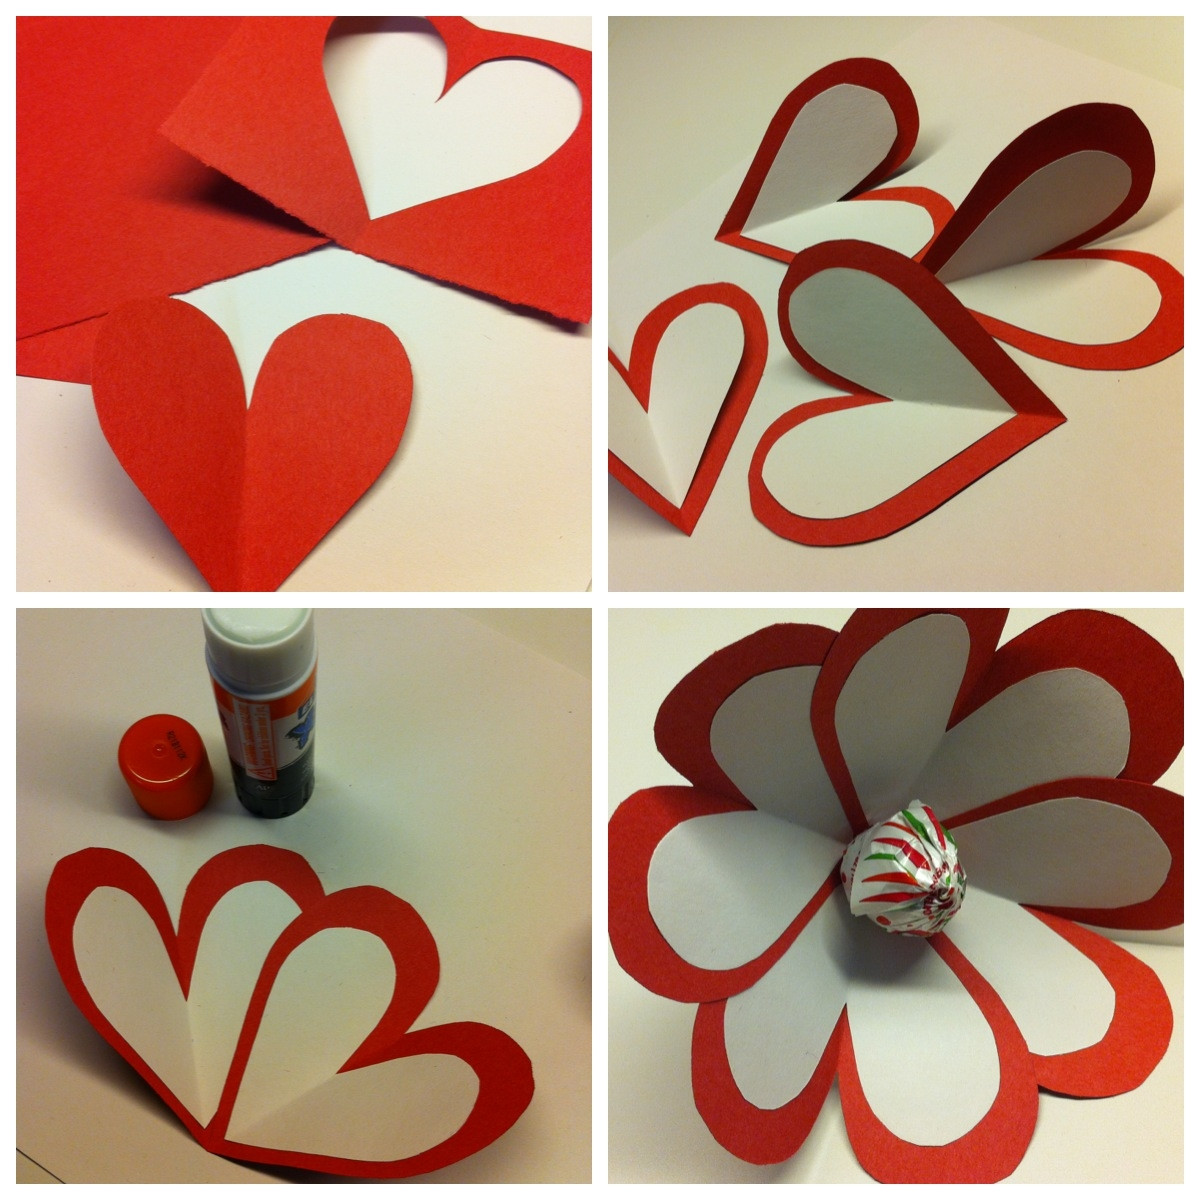 Best ideas about Valentine Craft Ideas For Kids
. Save or Pin valentine s day kids crafts Ideas for Kids Now.